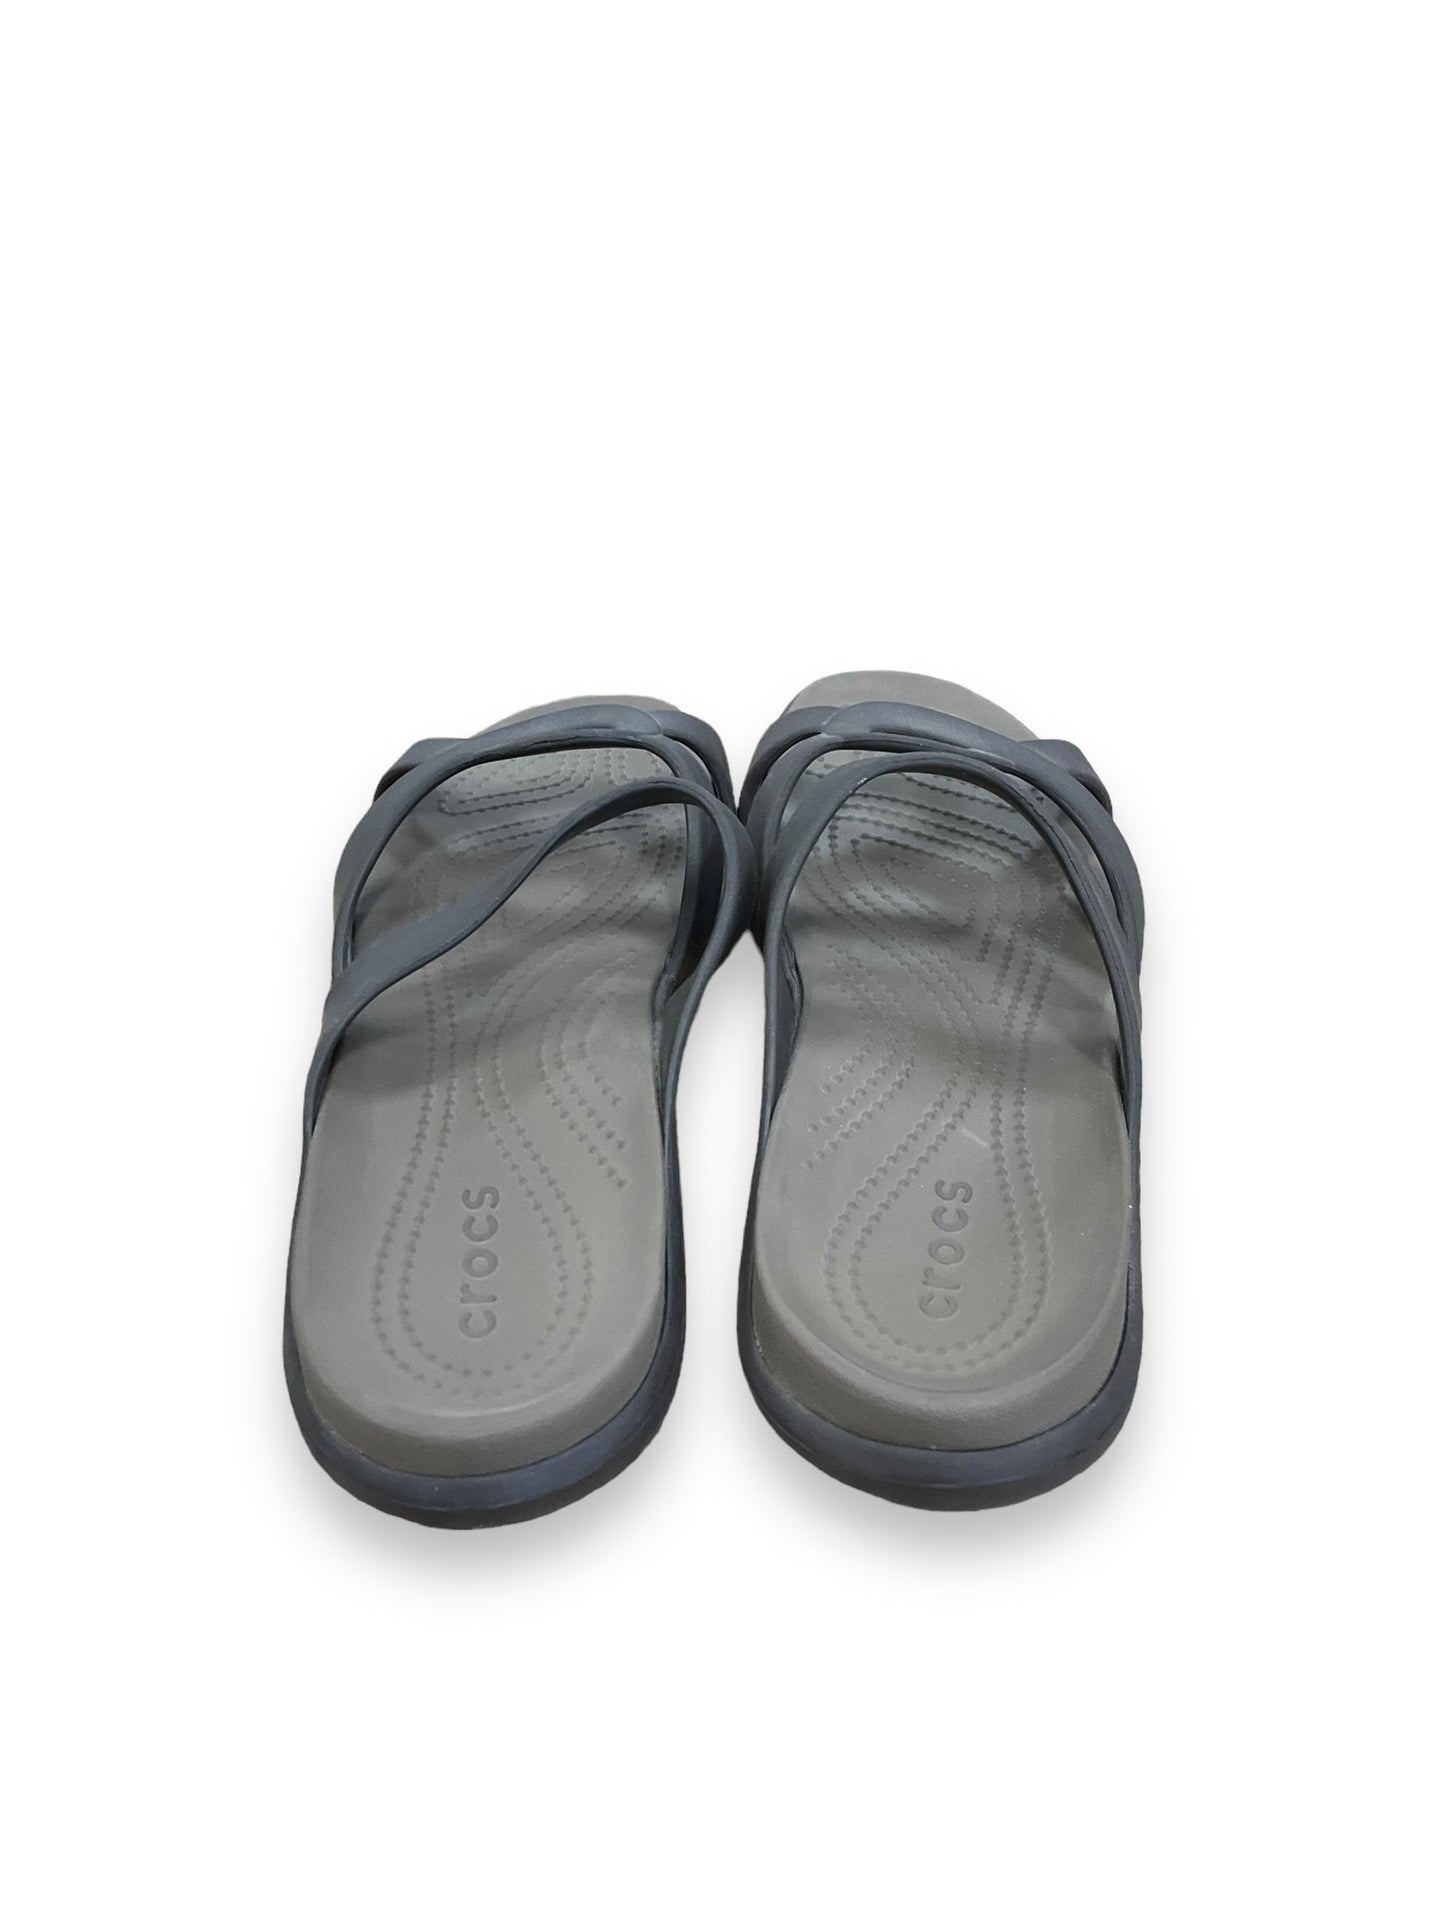 Brown Sandals Flats Crocs, Size 10